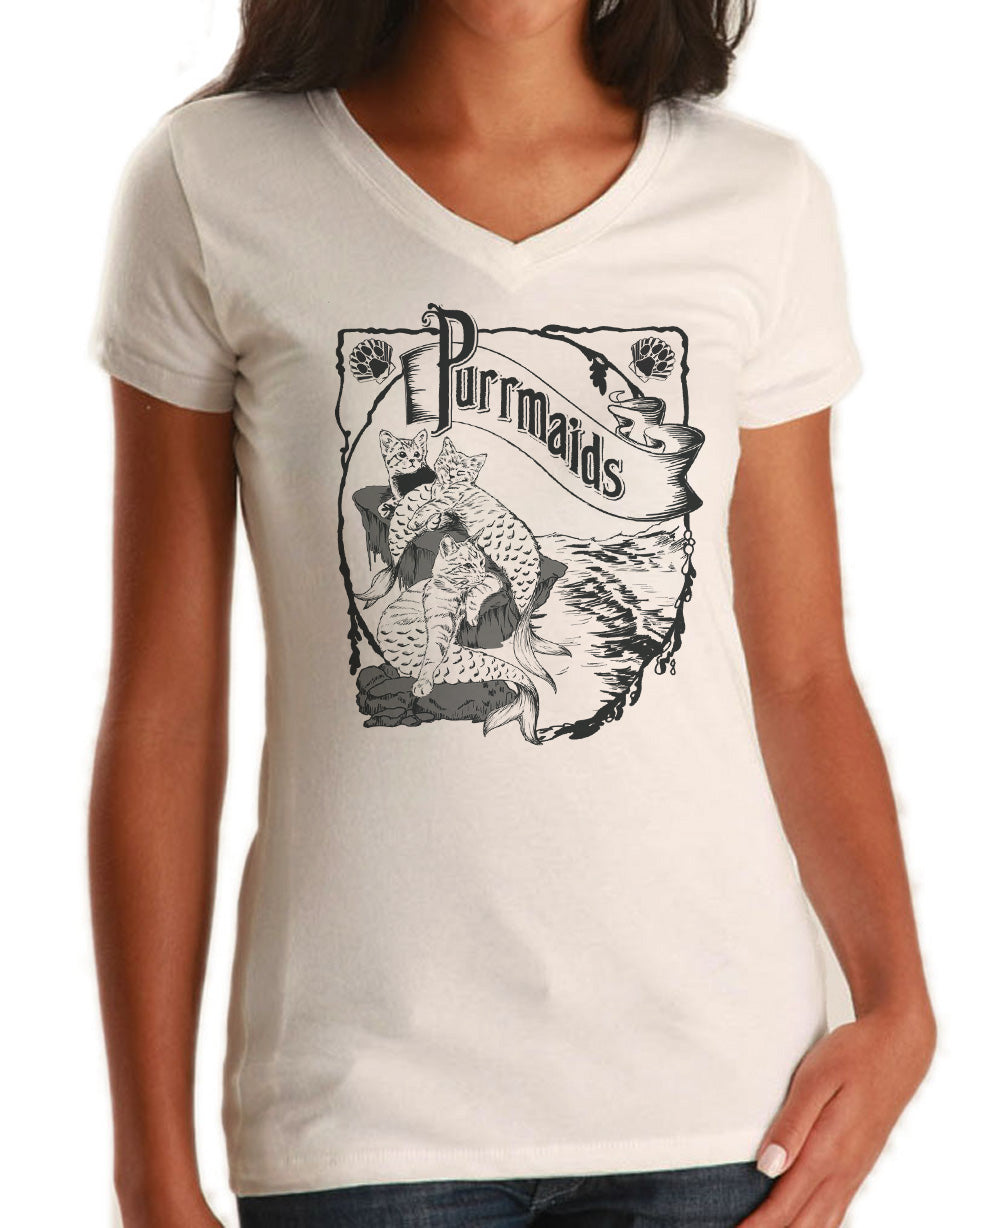 Women's Purrmaids Vneck T-Shirt - By Ex-Boyfriend